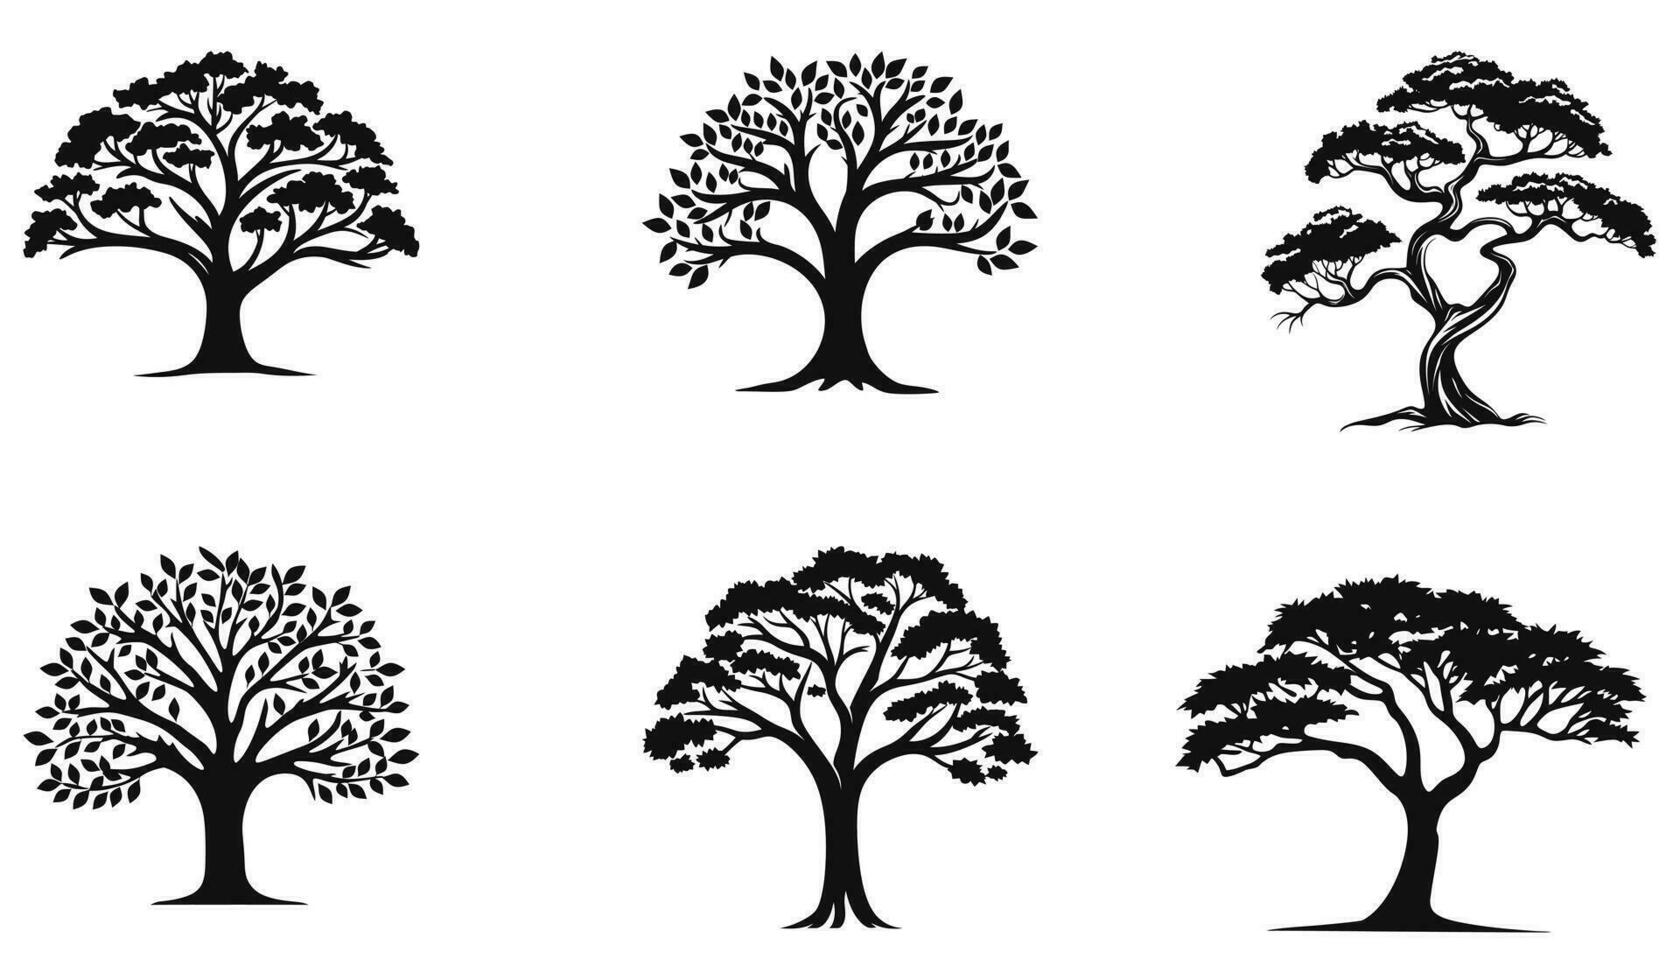 Sylvan Shadows  Artistic Tree Silhouettes vector